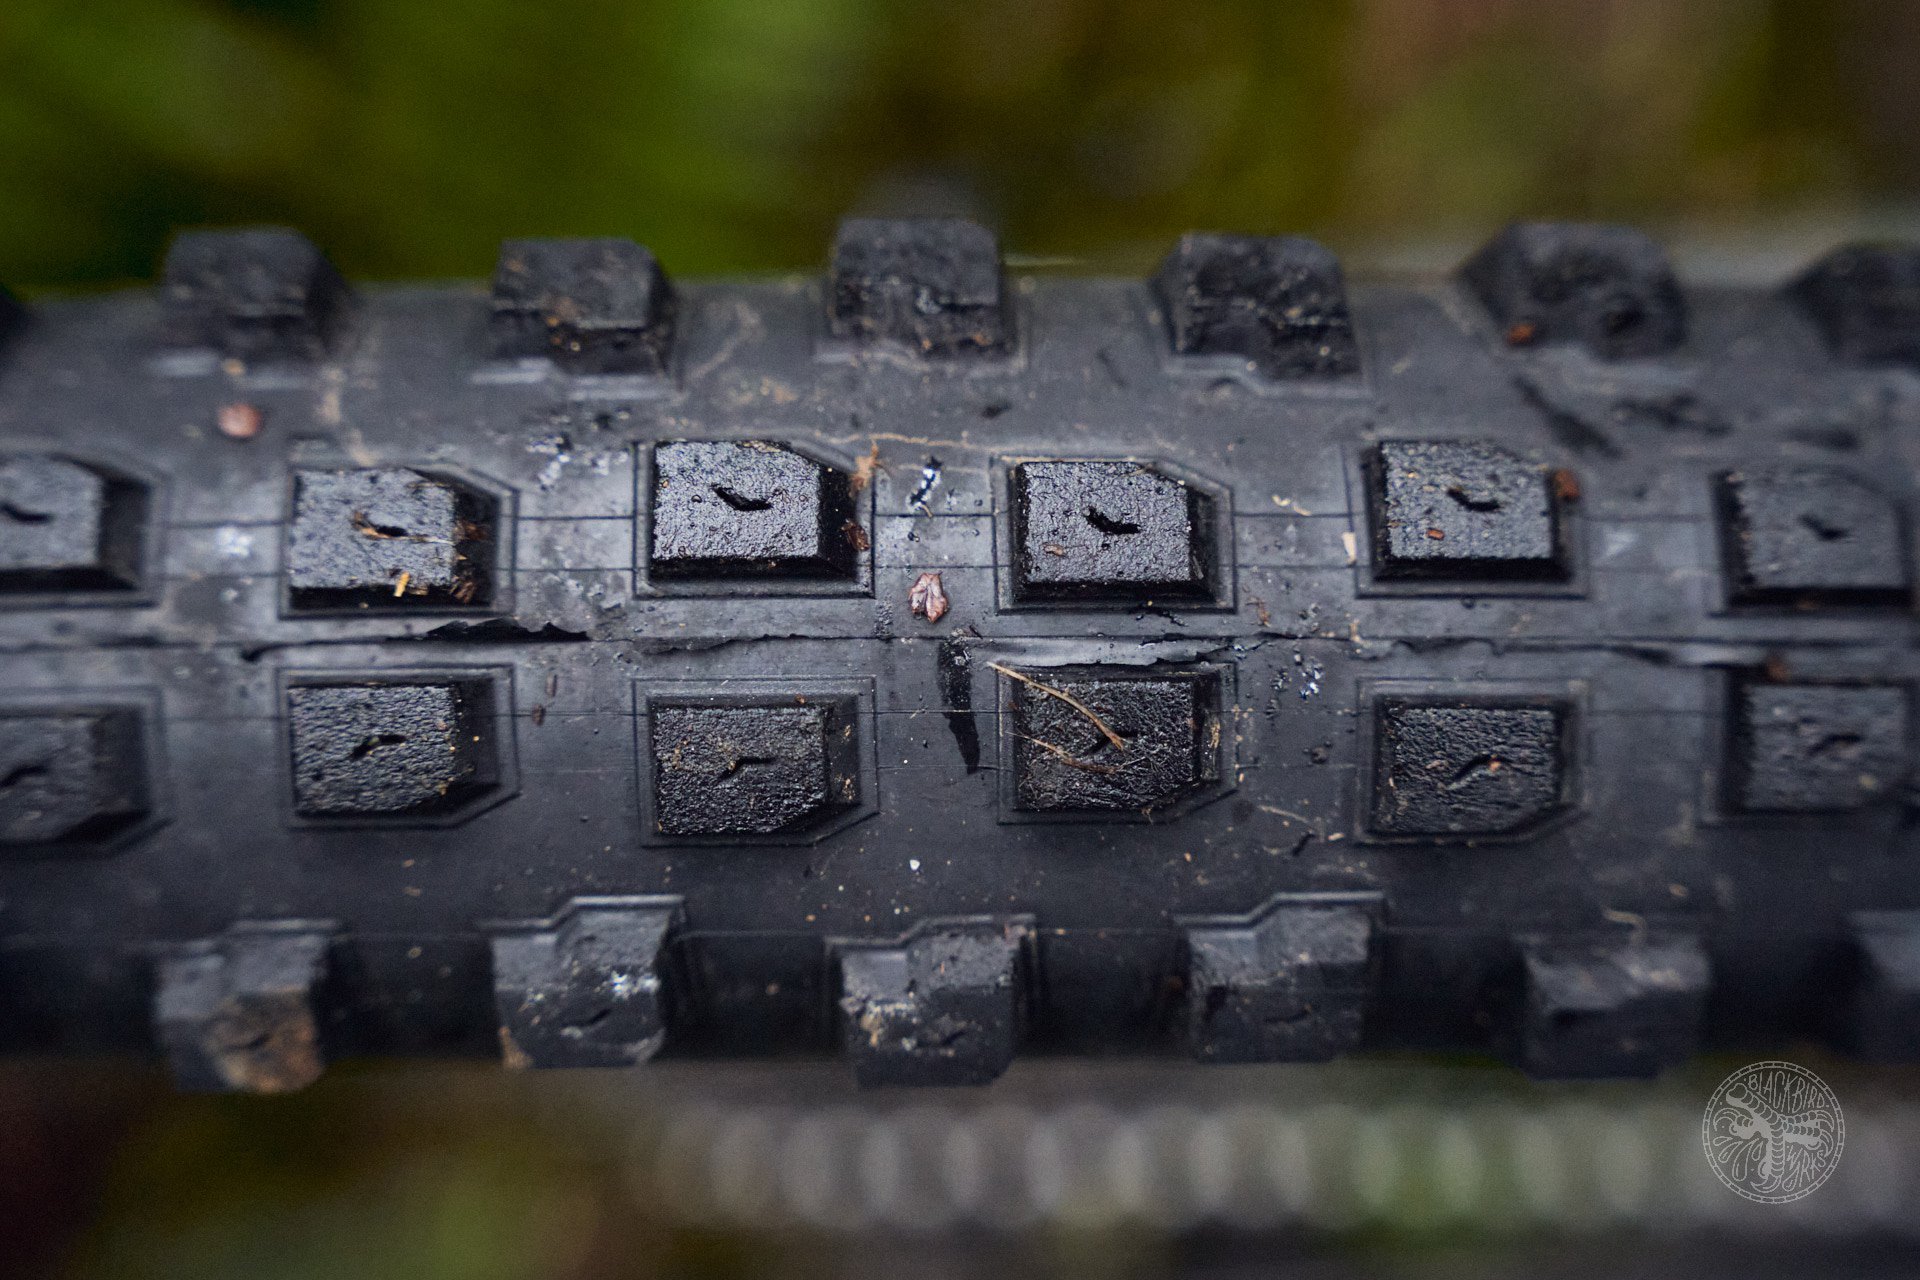 deniz merdano delium tires versatile rugged 8.jpg